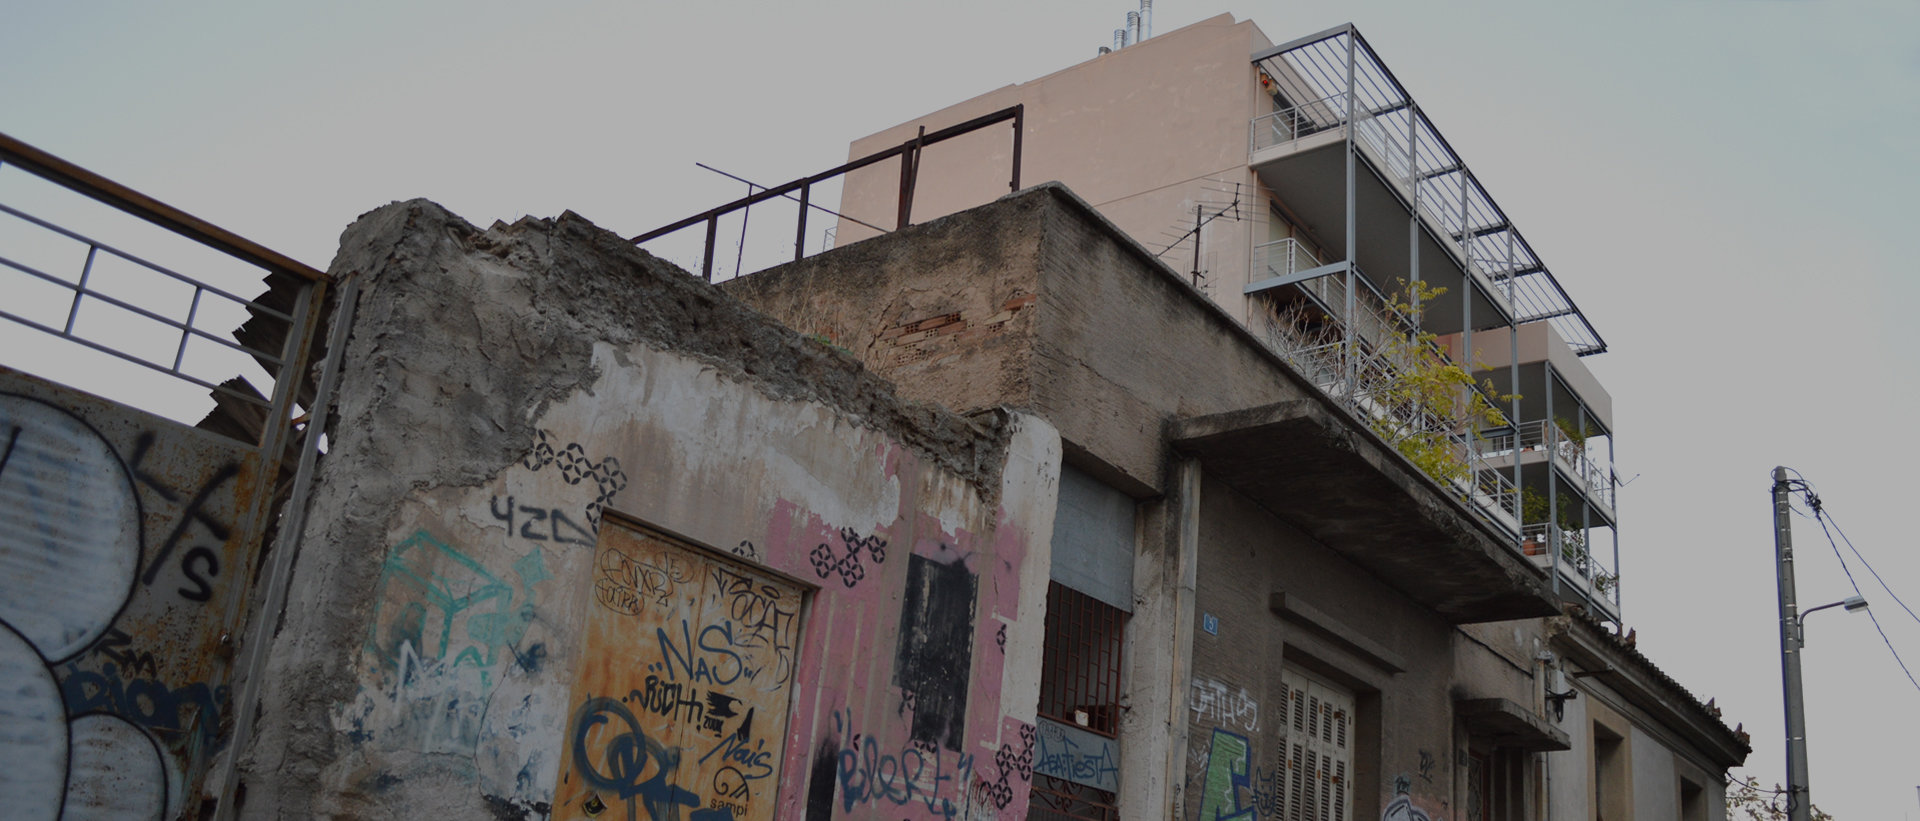 City.Stories | Παραμύθια ανάπλασης στη μικρή μας Αθήνα